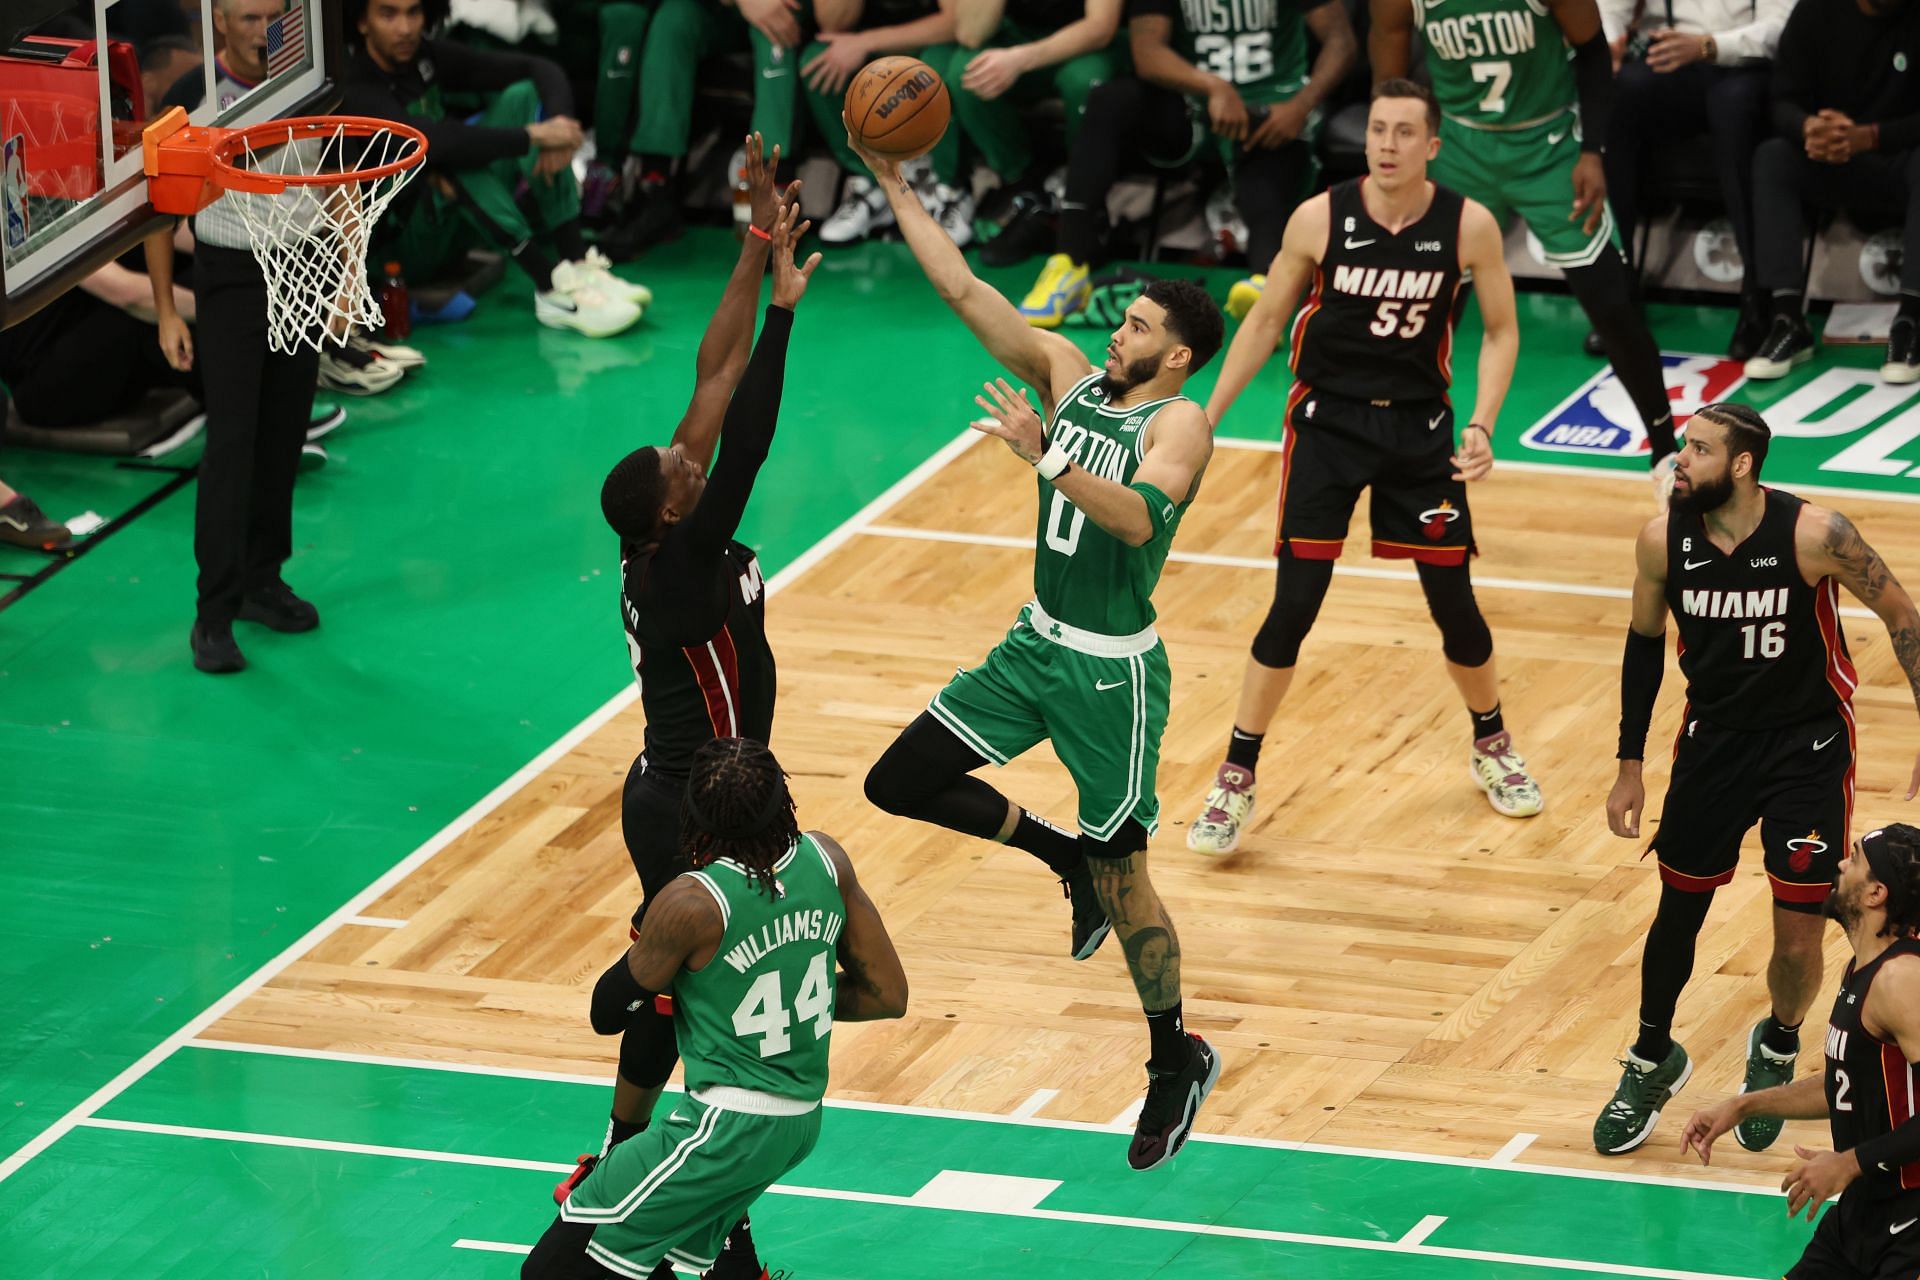 Celtics trade rumors: Boston in the market for big man ahead of